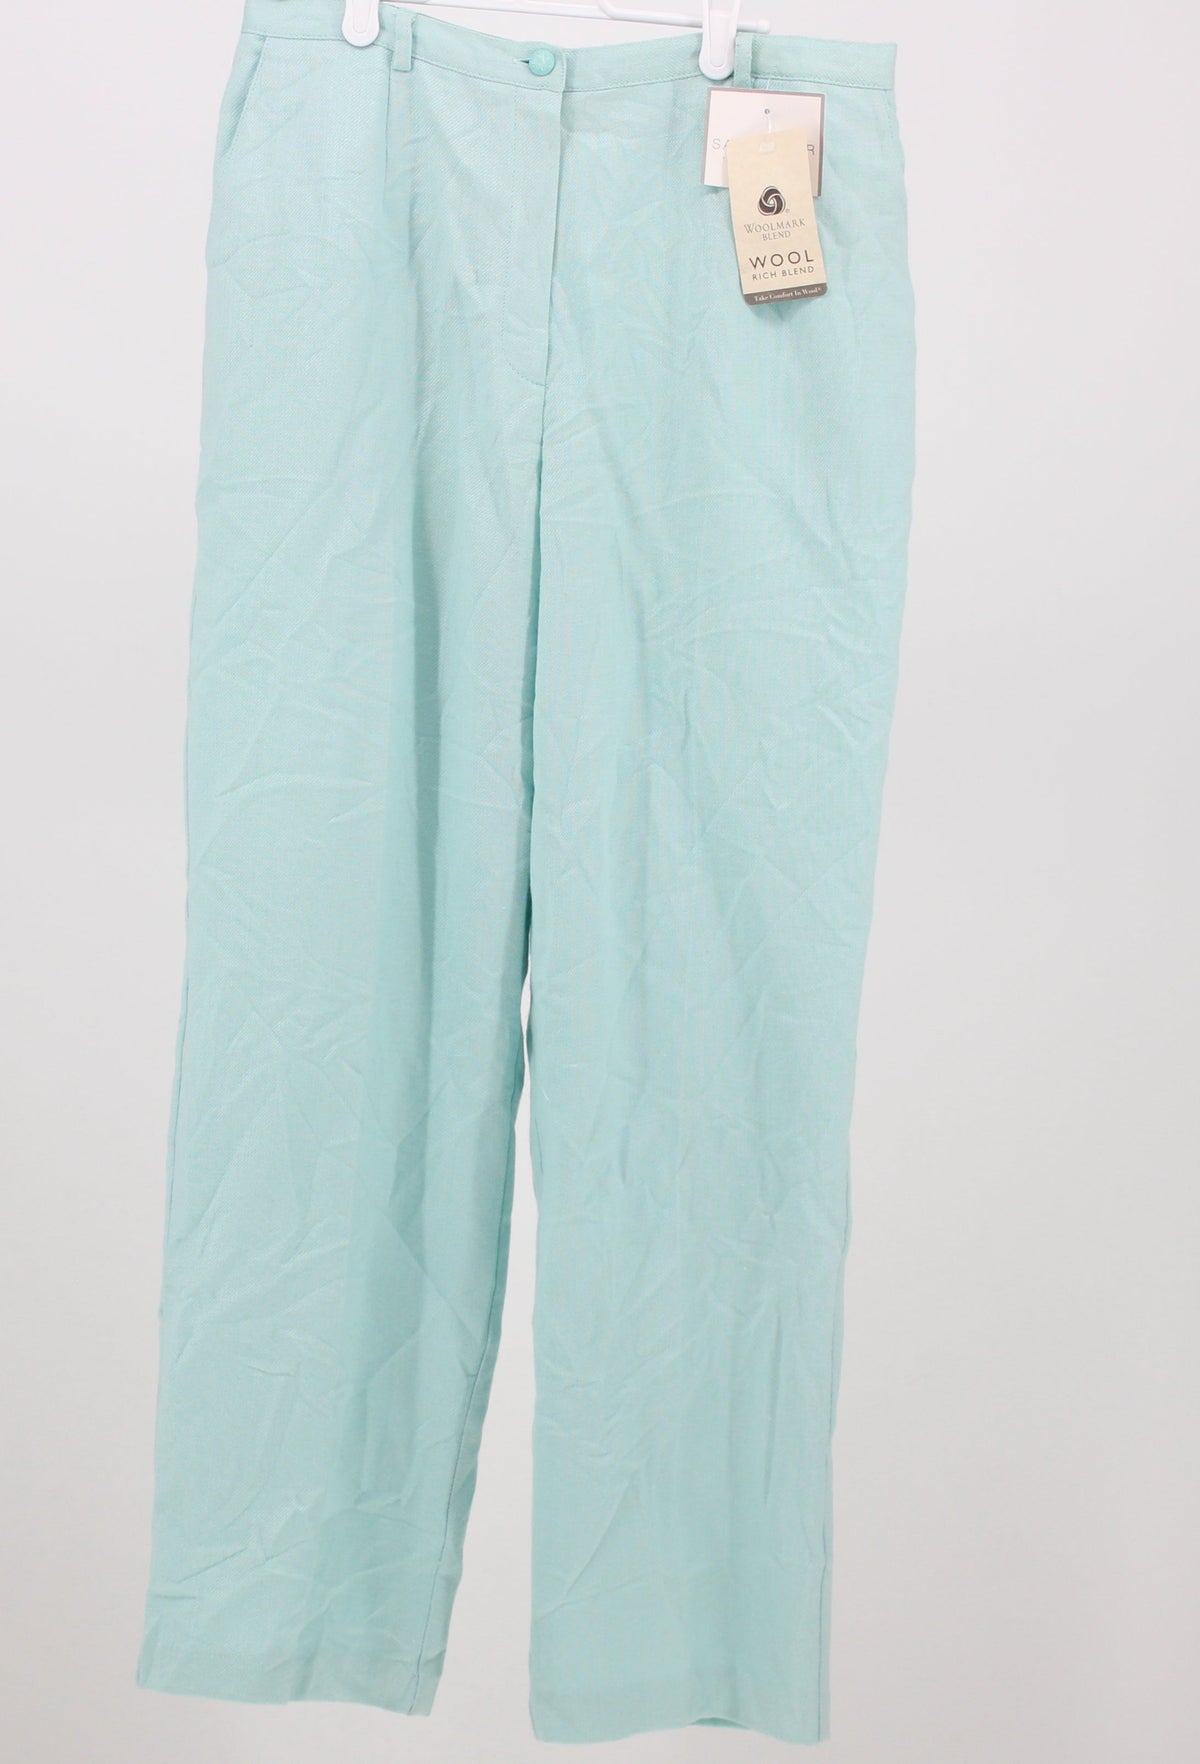 Sagharbour Mint Pleated Pants